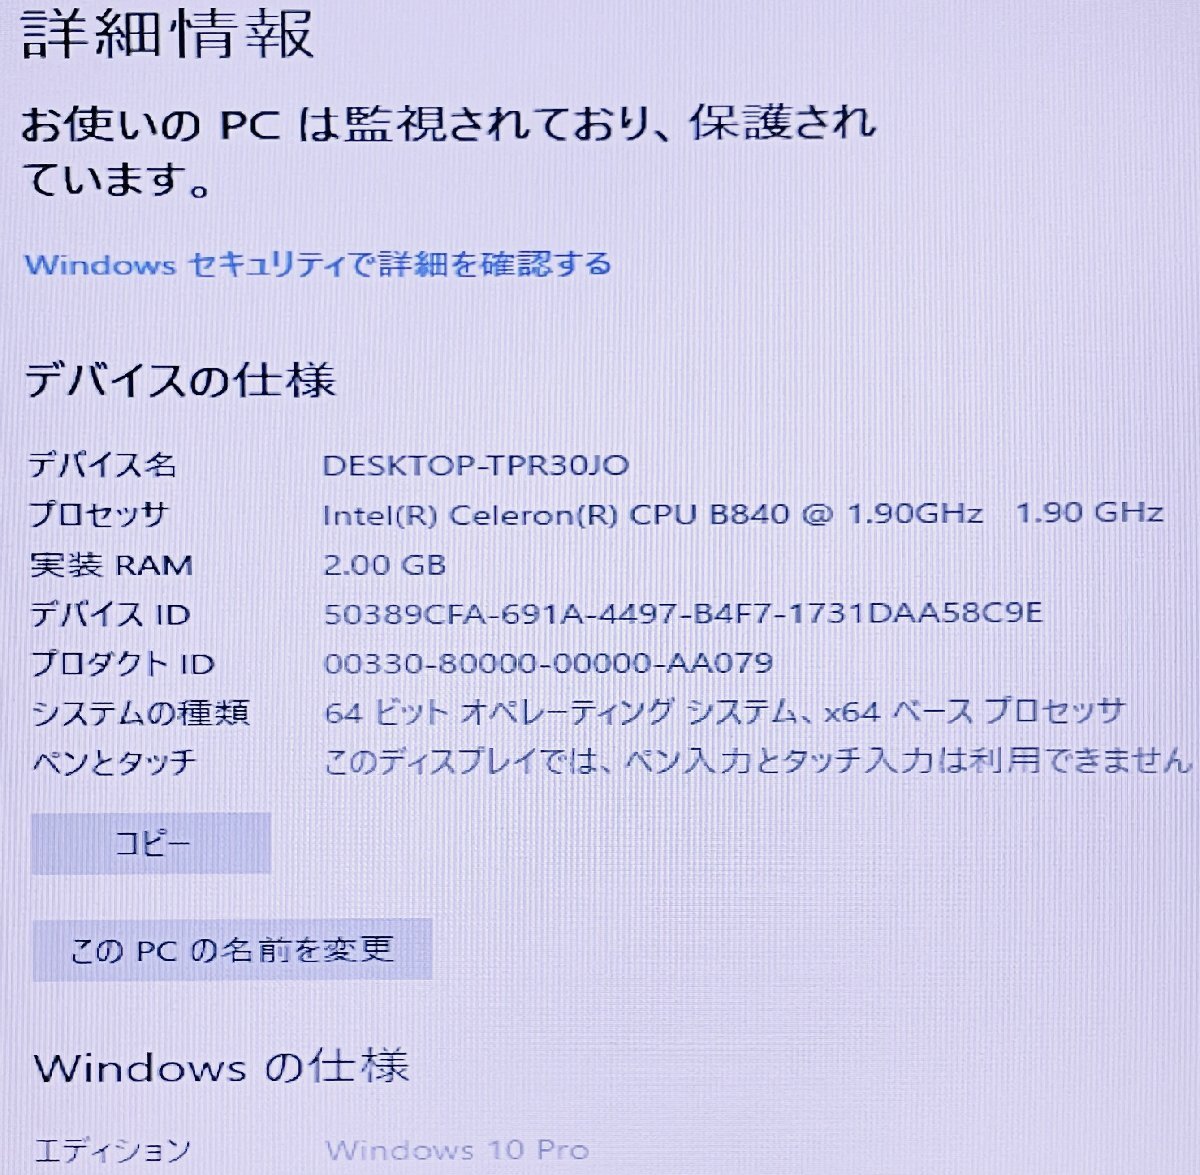 LC1317C HP ProBook 4530s CPU: Intel(R)Celeron(R) CPU B840 @1.90GHz HDD:320GB メモリ:2GB N_画像7